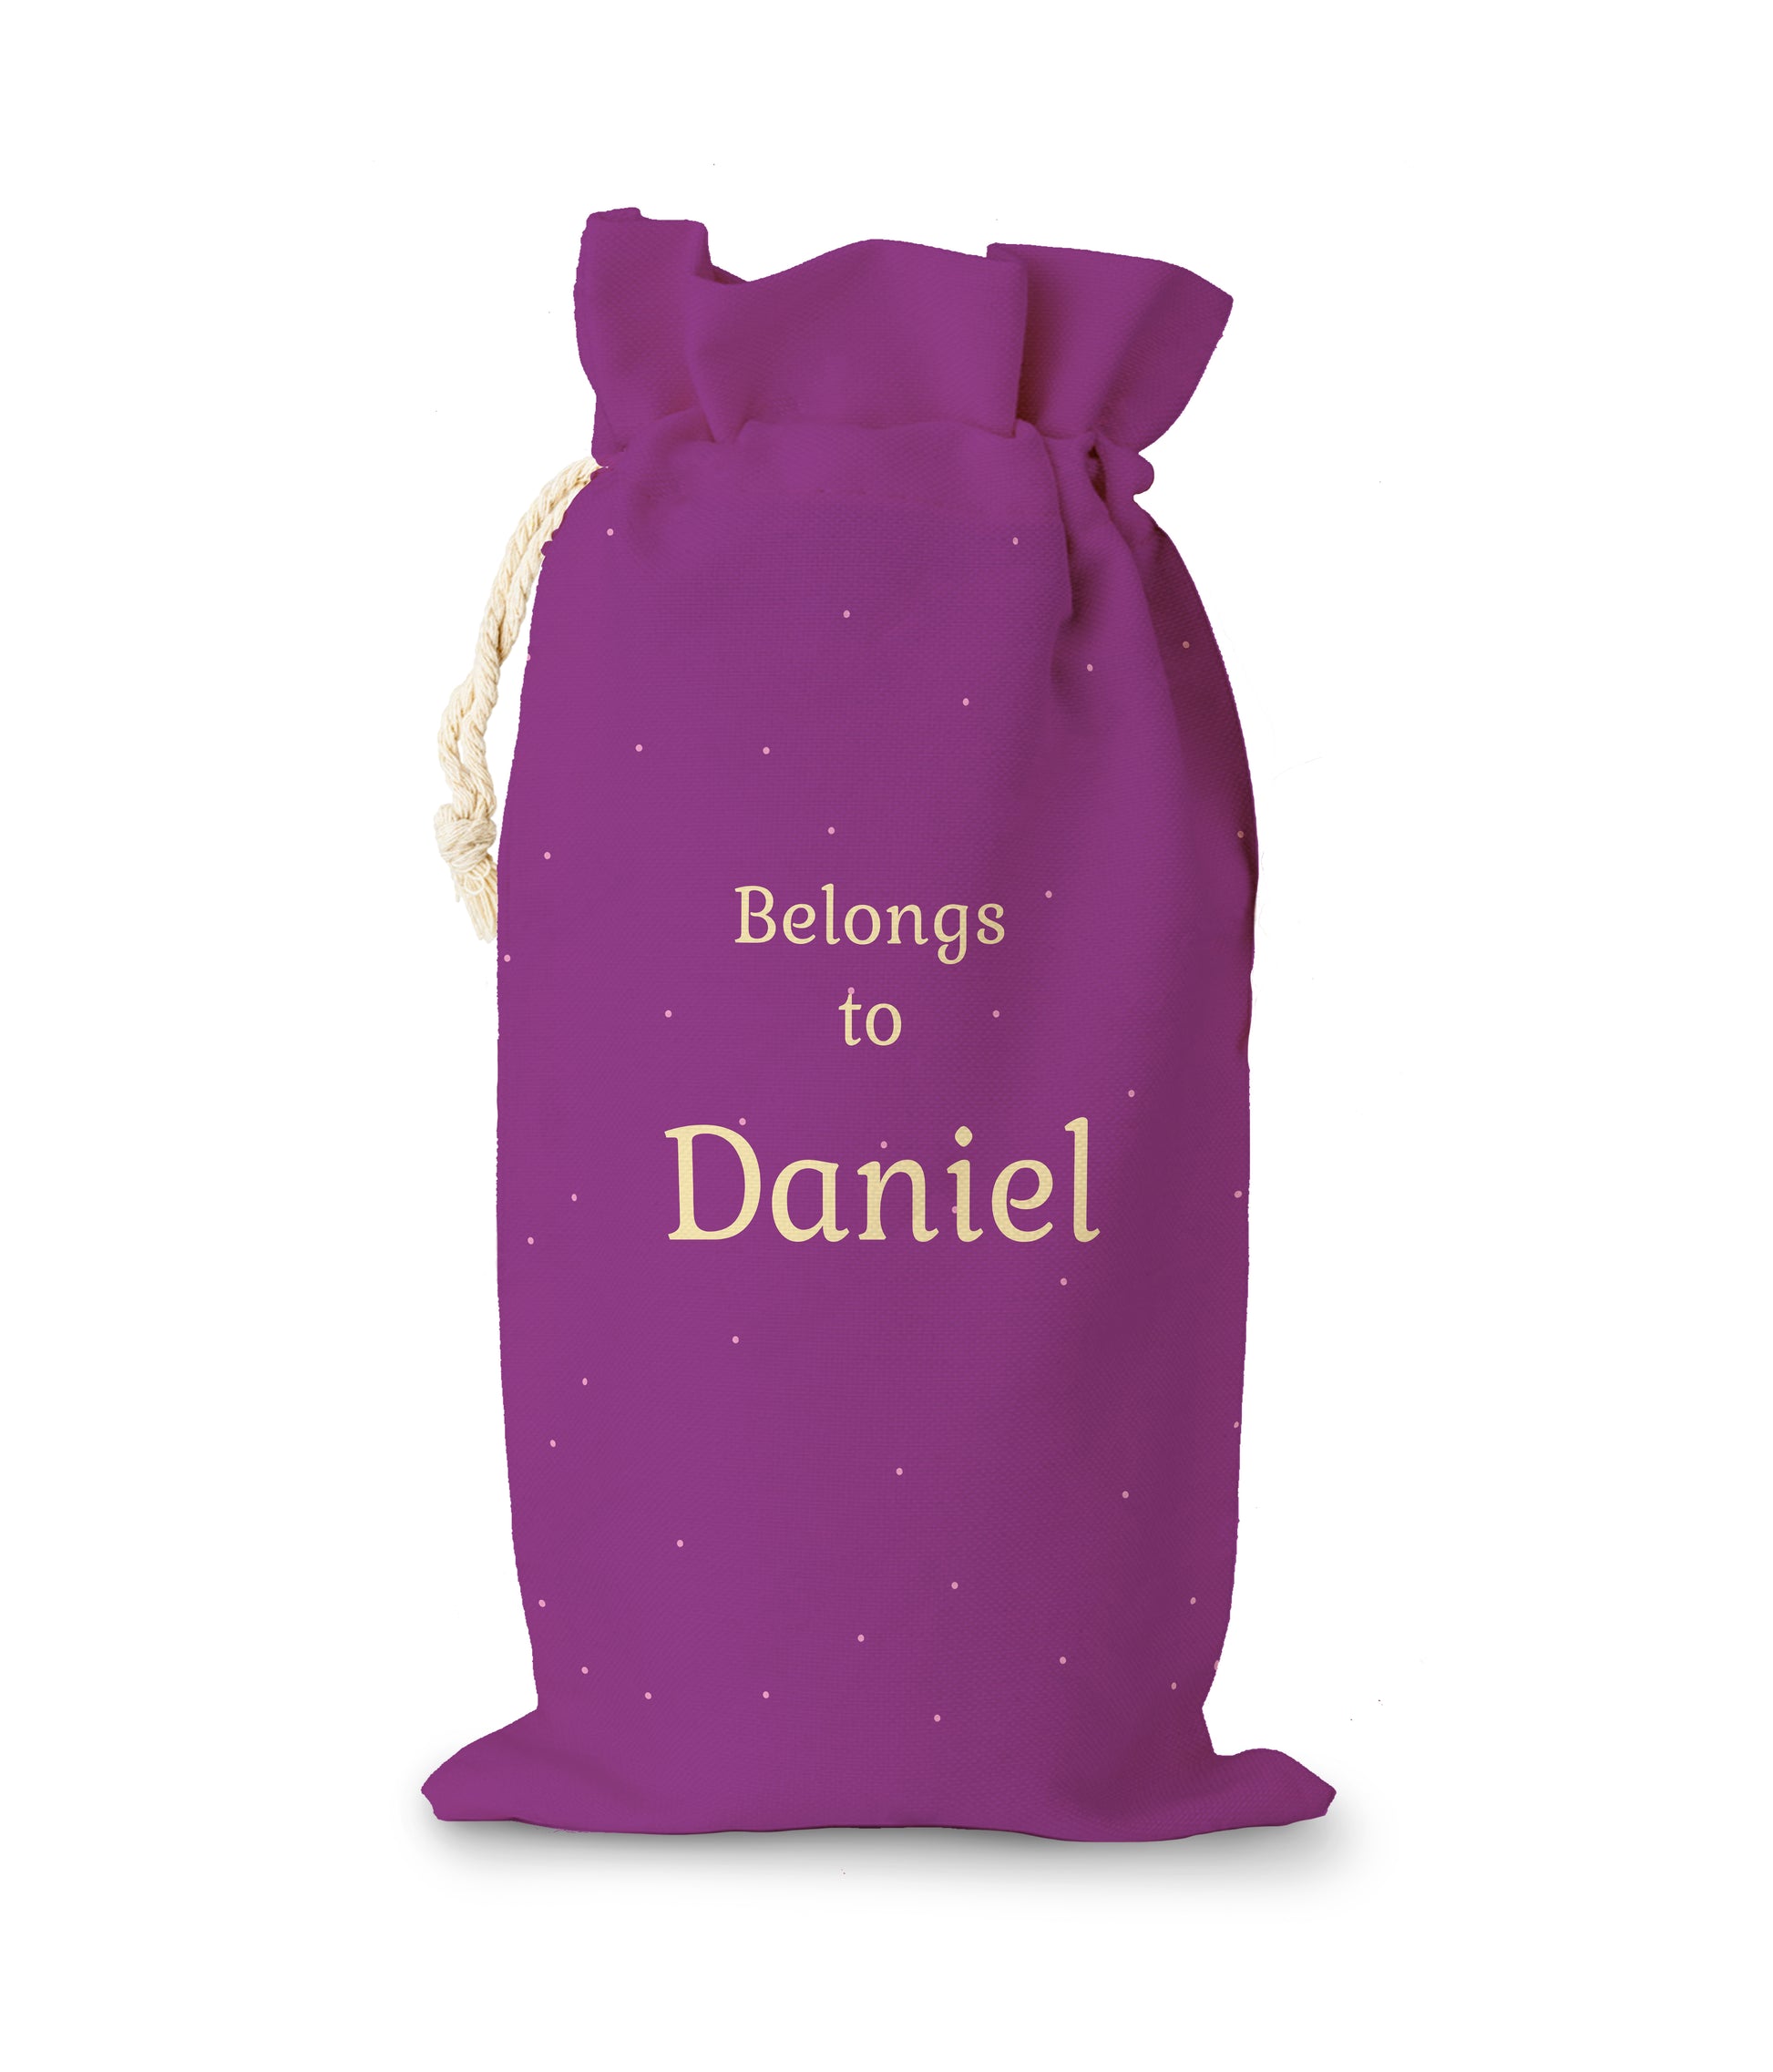 Terrifying Jump Scare Halloween Sack Text is "Belongs to Daniel"